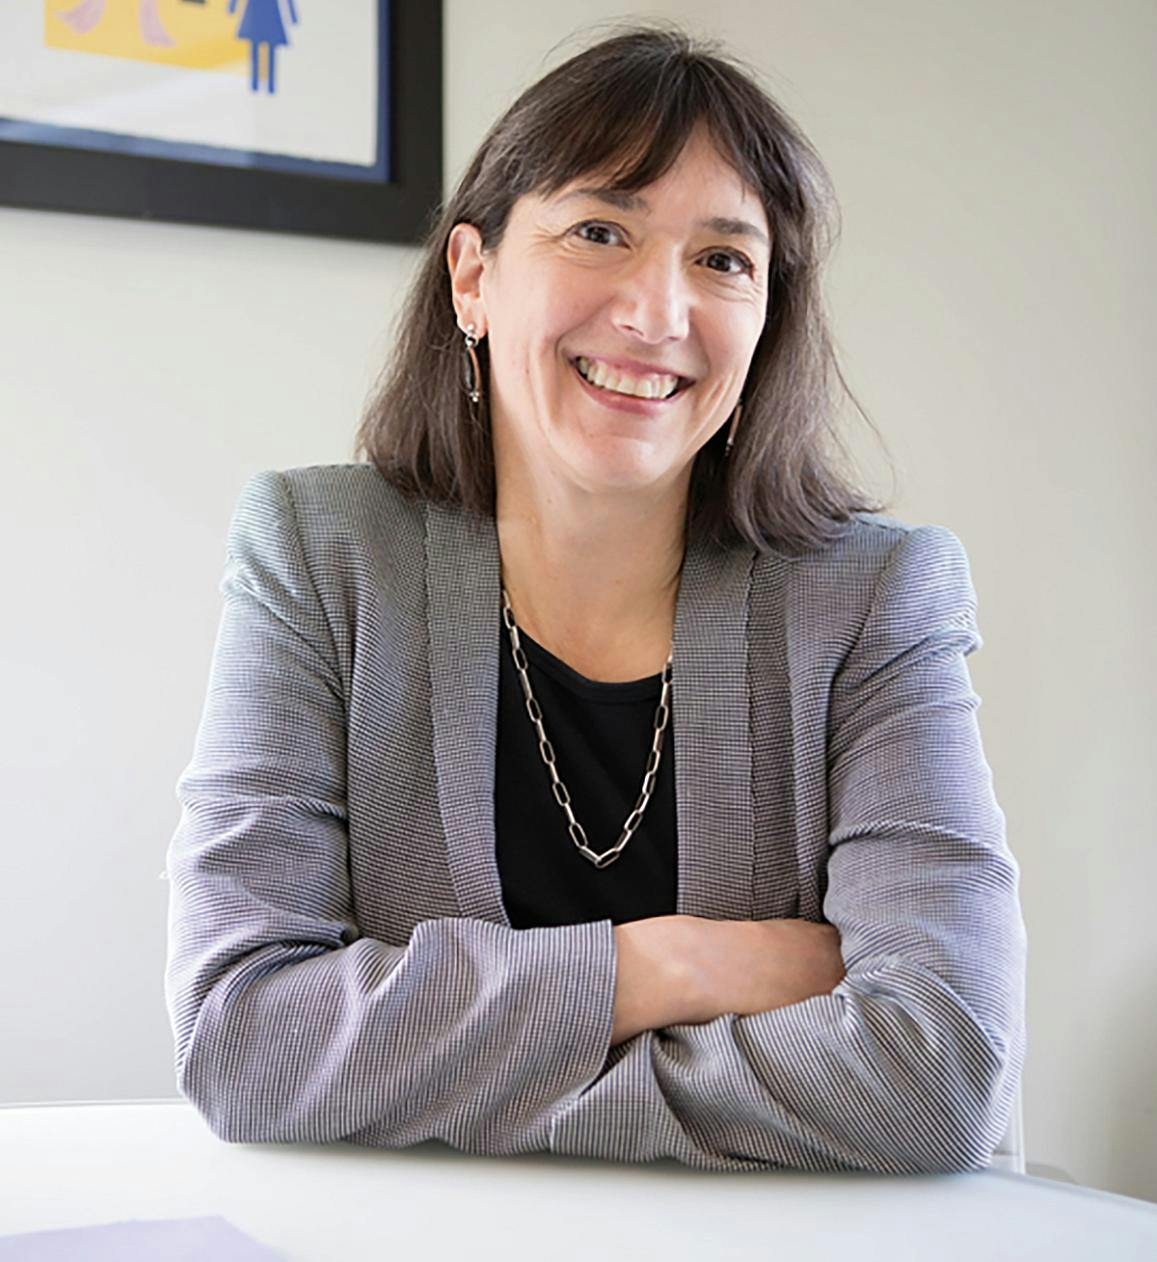 Monica Bertagnolli, director of the National Cancer Institute